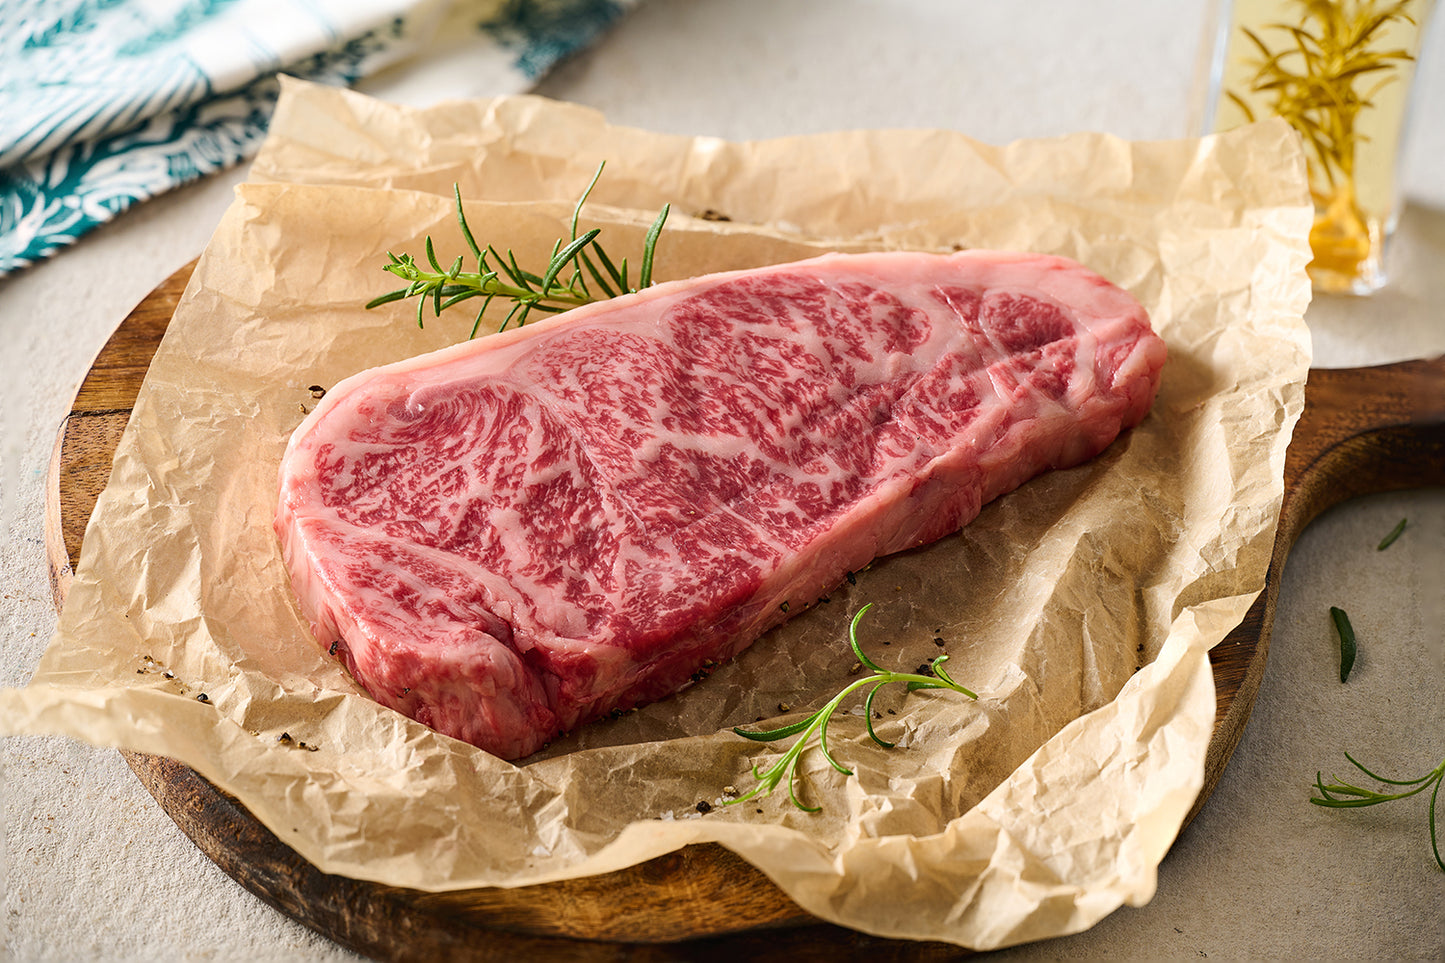 Japanese A5 Wagyu Sirloin Beef Steak (300g)